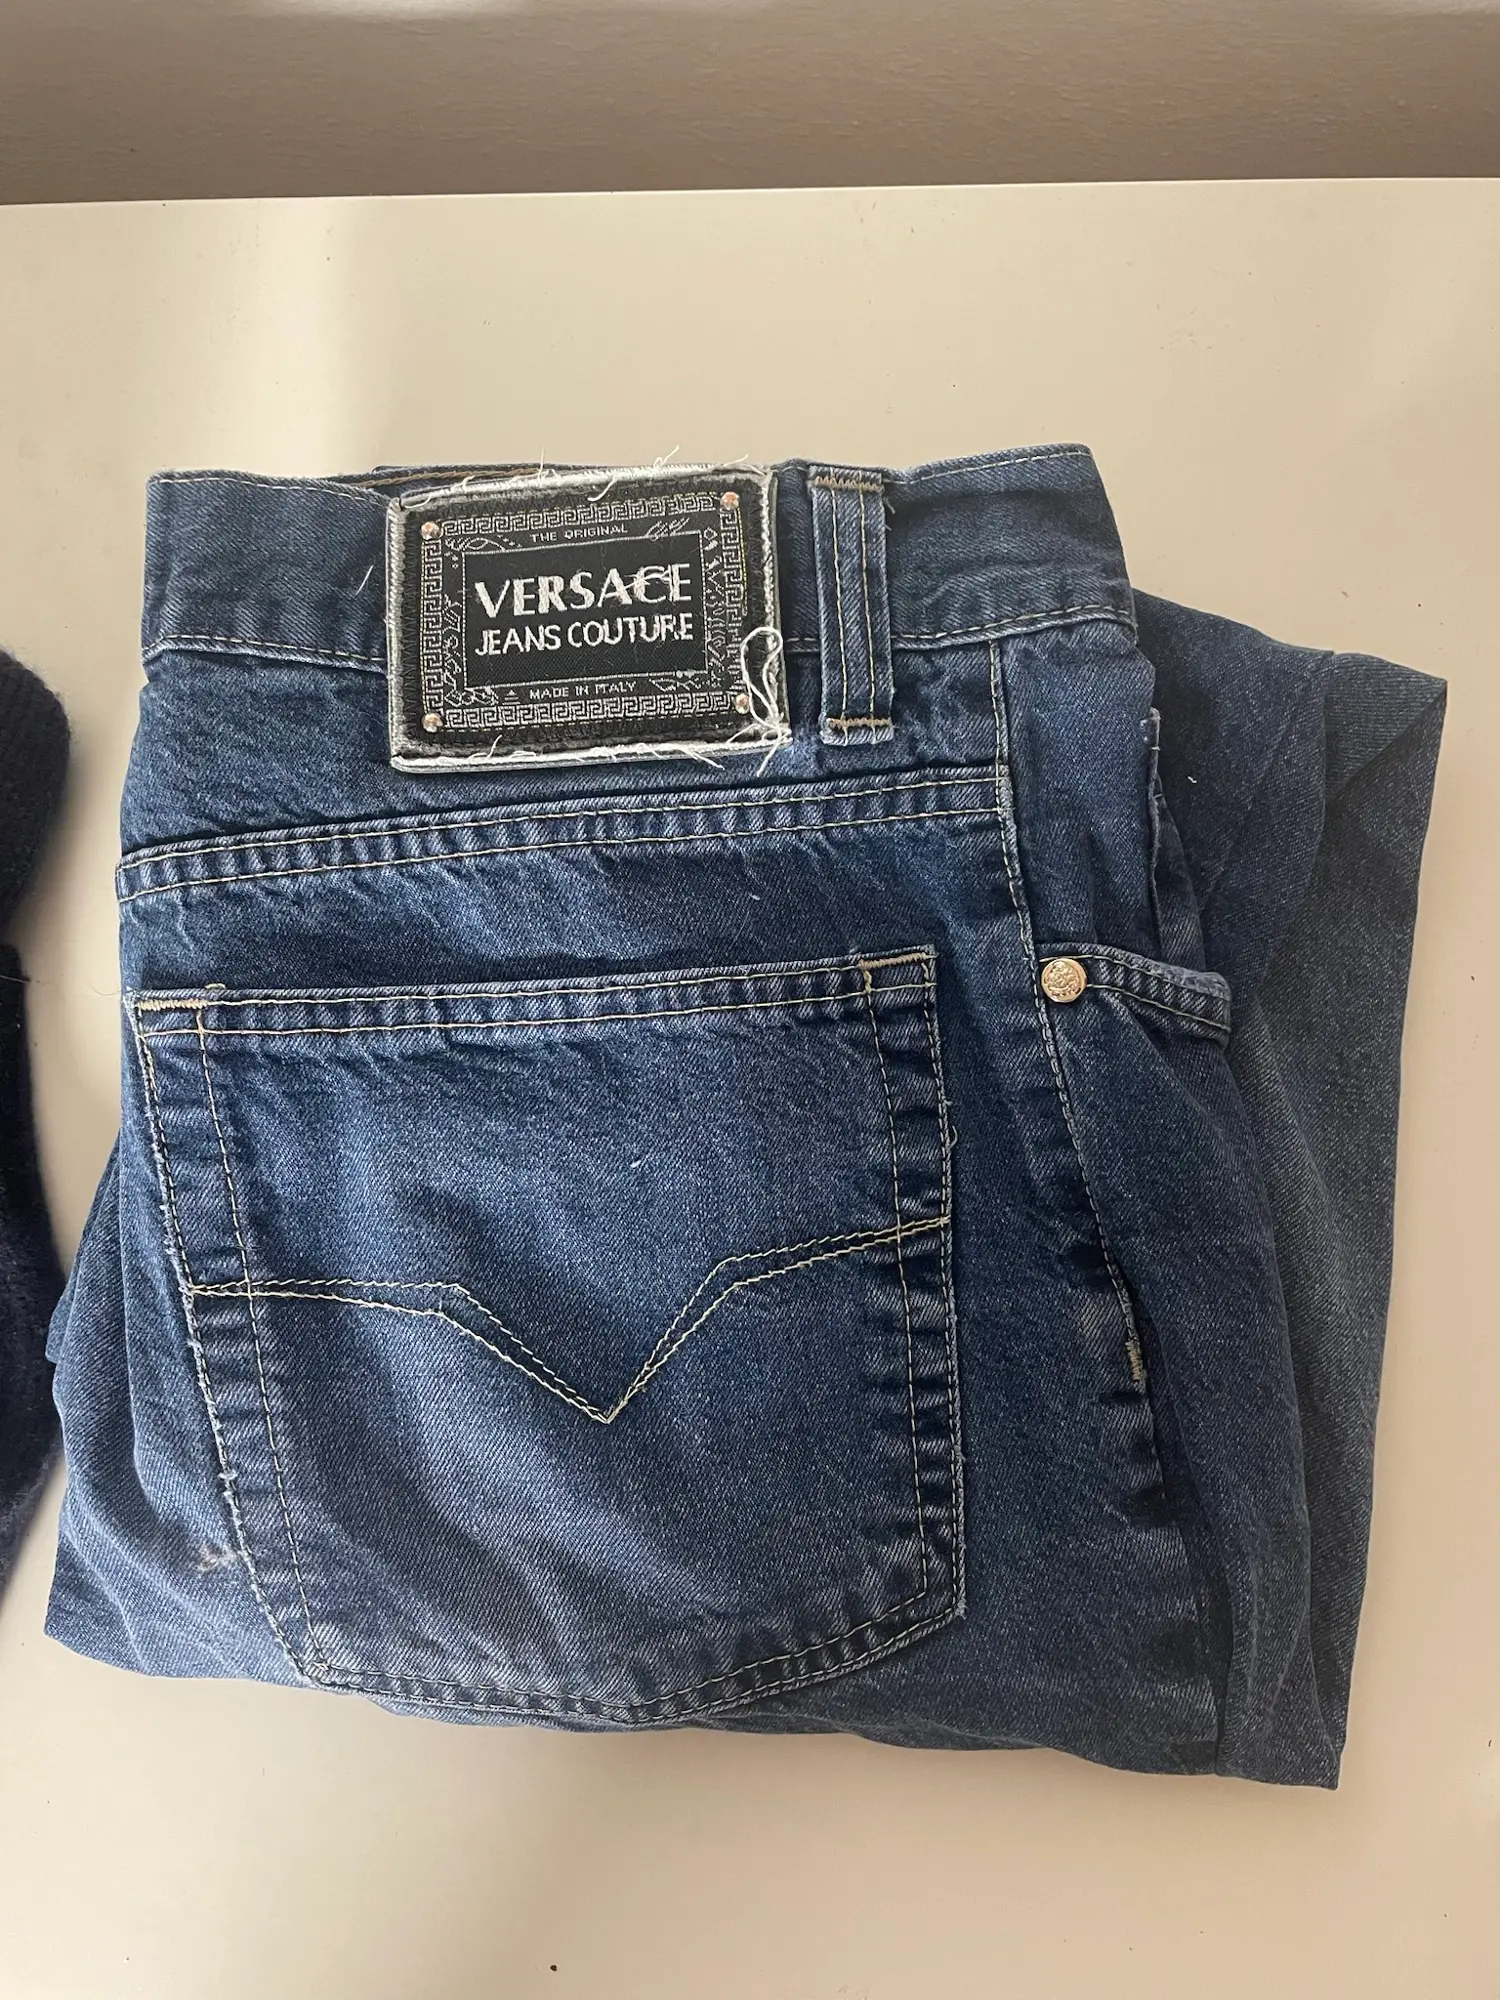 Versace jeans